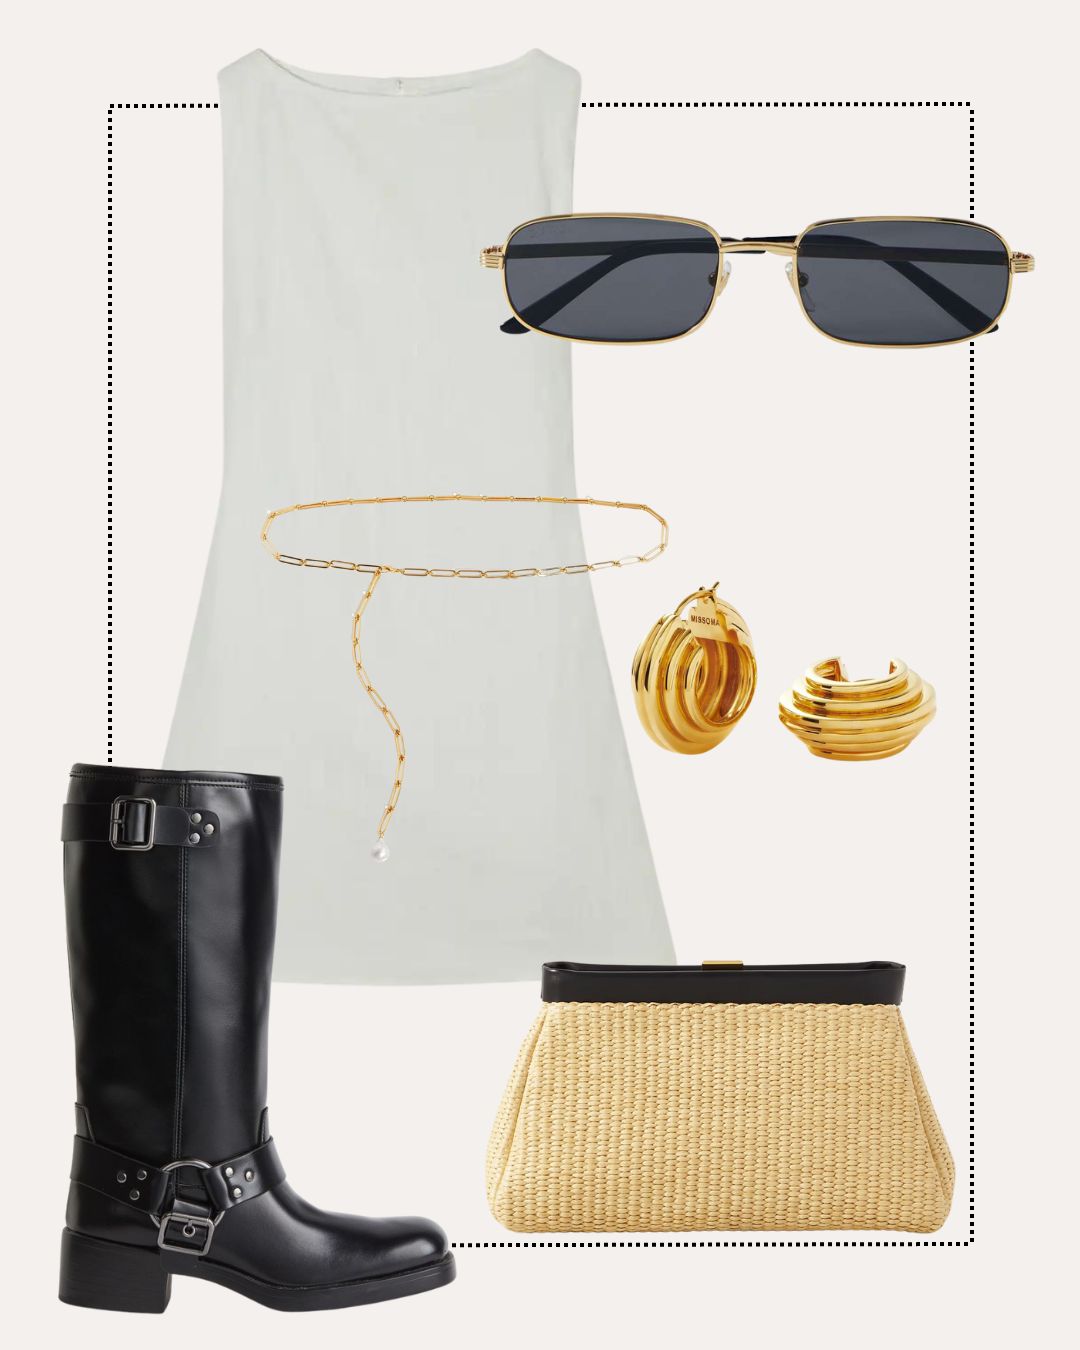 What to wear to Coachella: Little white dress + biker boots